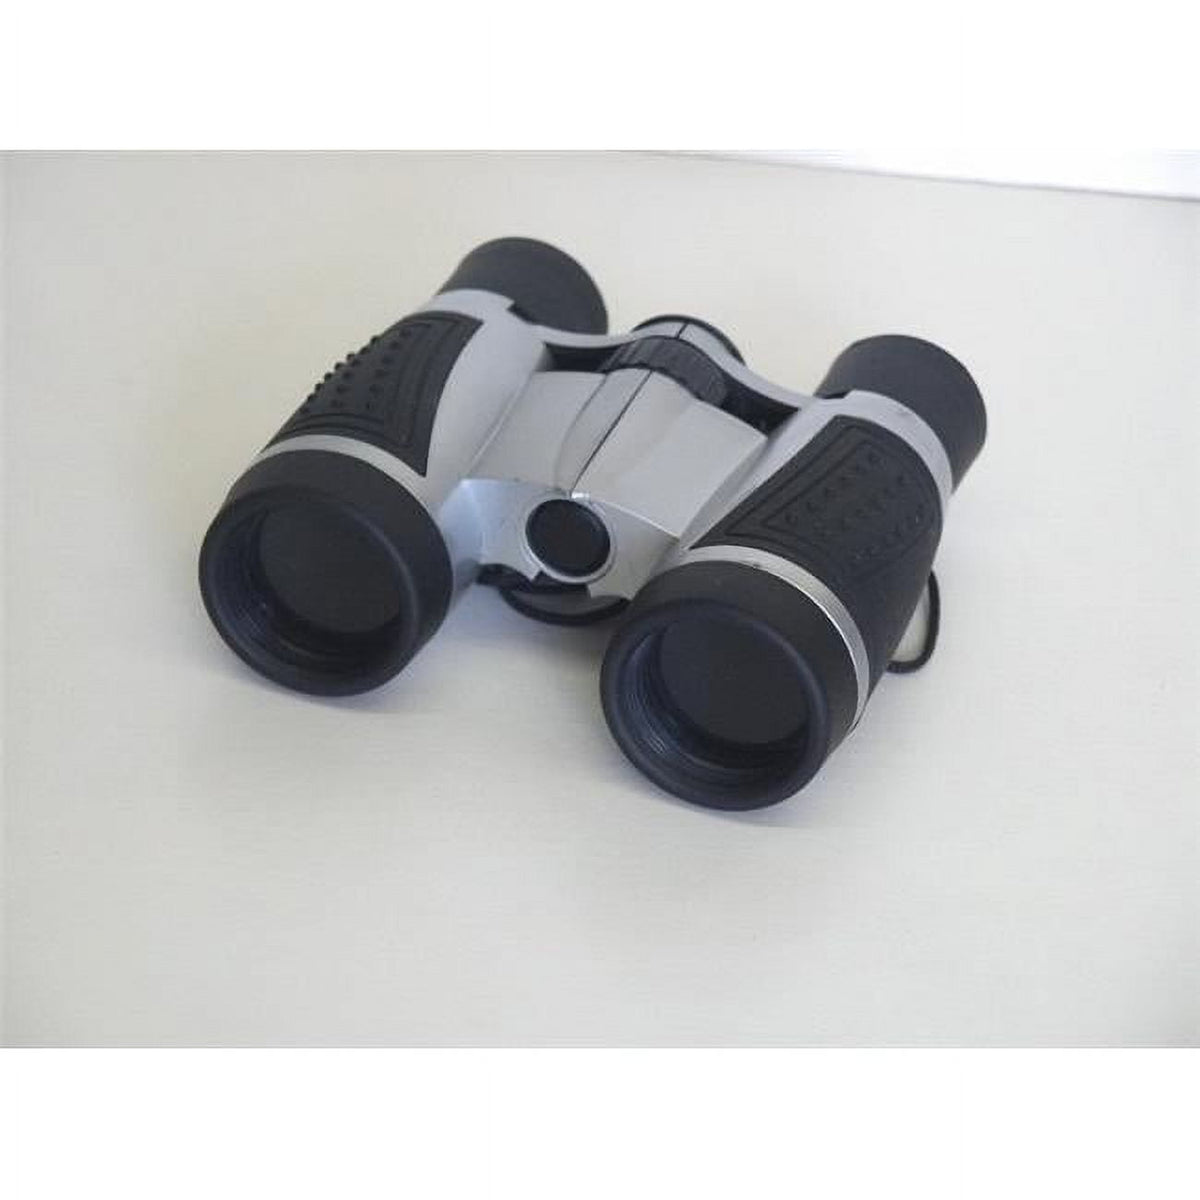 Sonnet Industries 4 x 30 in. Wide Field Binocular With Carrying Case